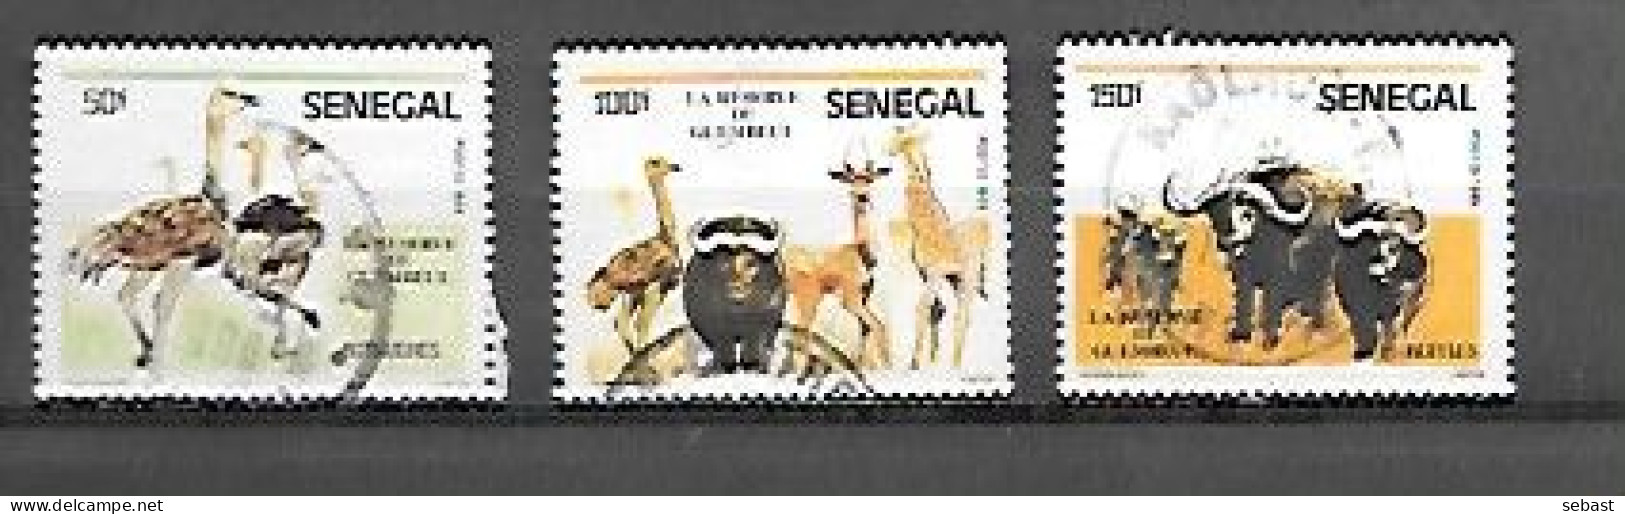 TIMBRE OBLITERE DU SENEGAL DE 1986 N° MICHEL 890 893/94 - Senegal (1960-...)